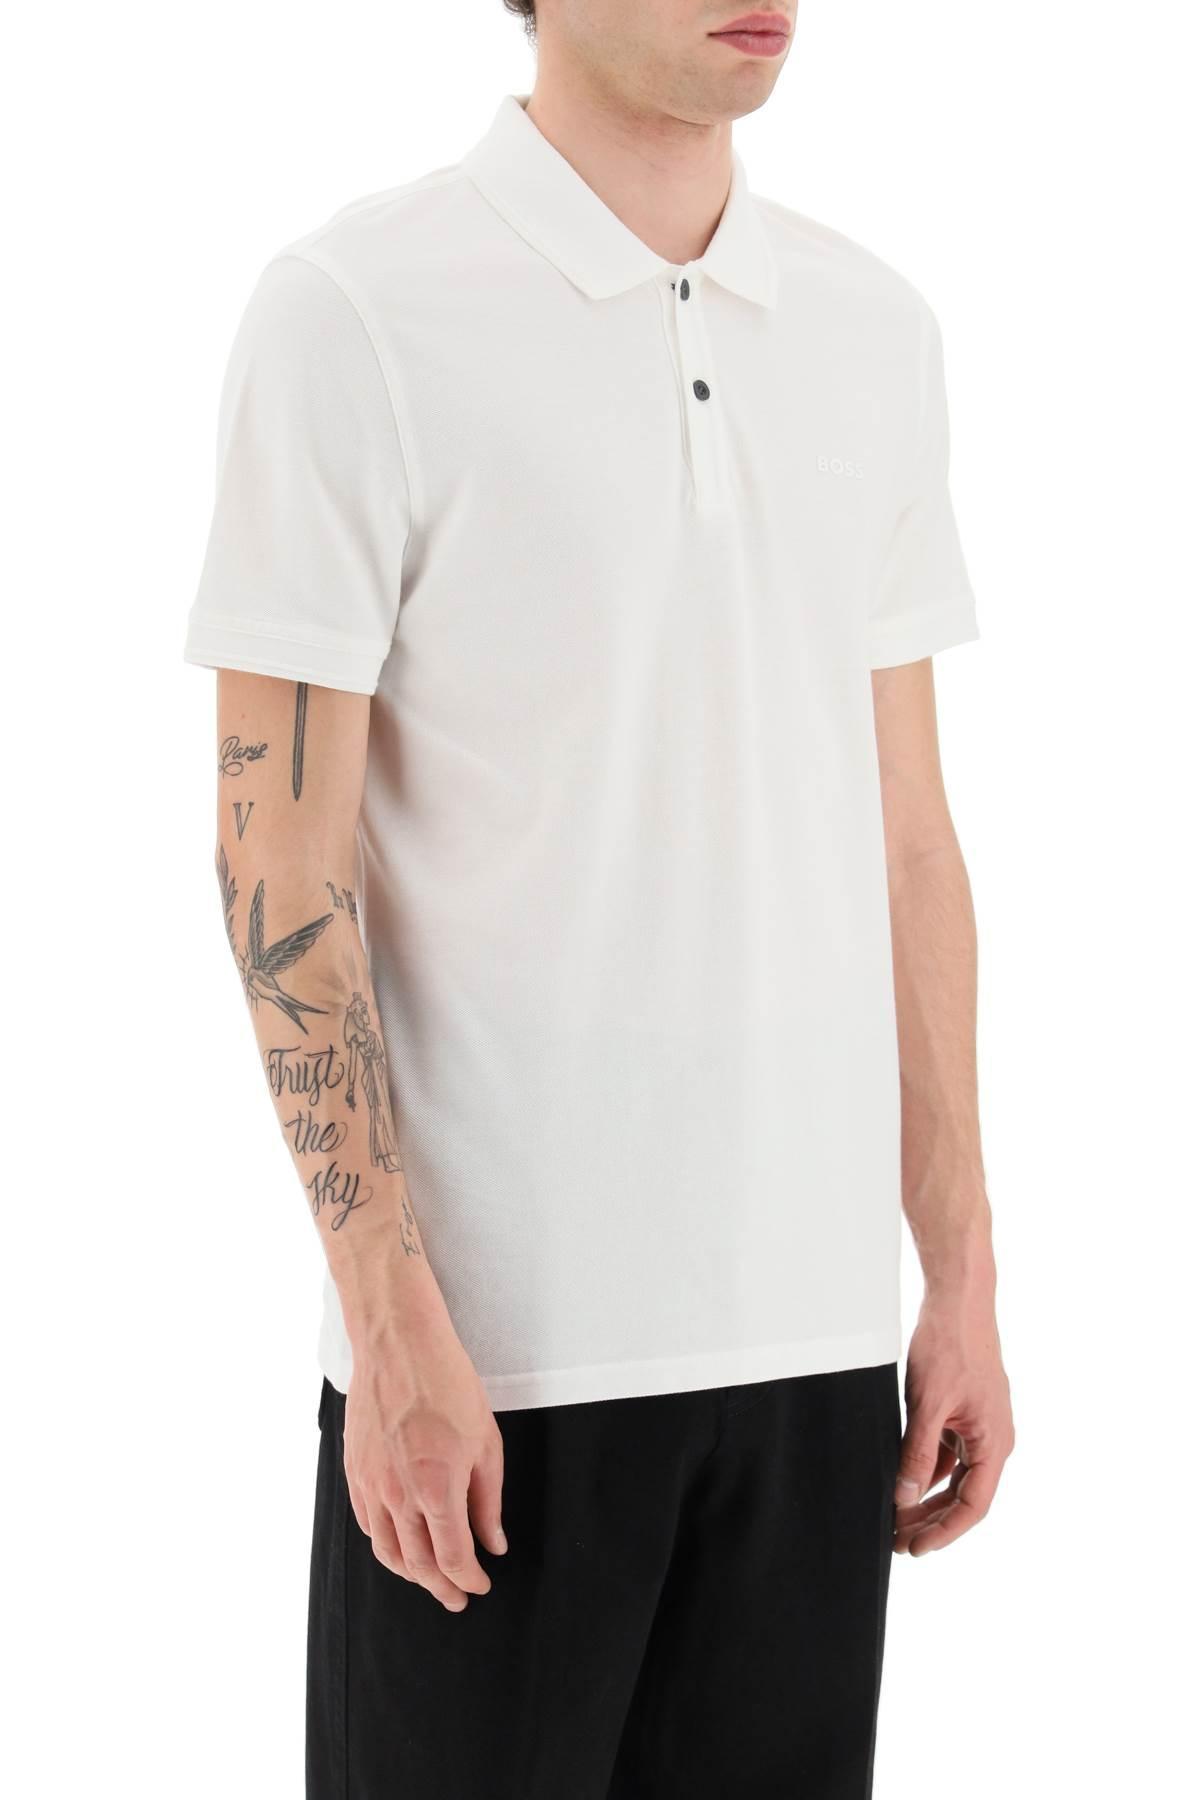 musicus Omgeving buiten gebruik BOSS by HUGO BOSS Slim Fit 'prime' Polo Shirt in White for Men | Lyst